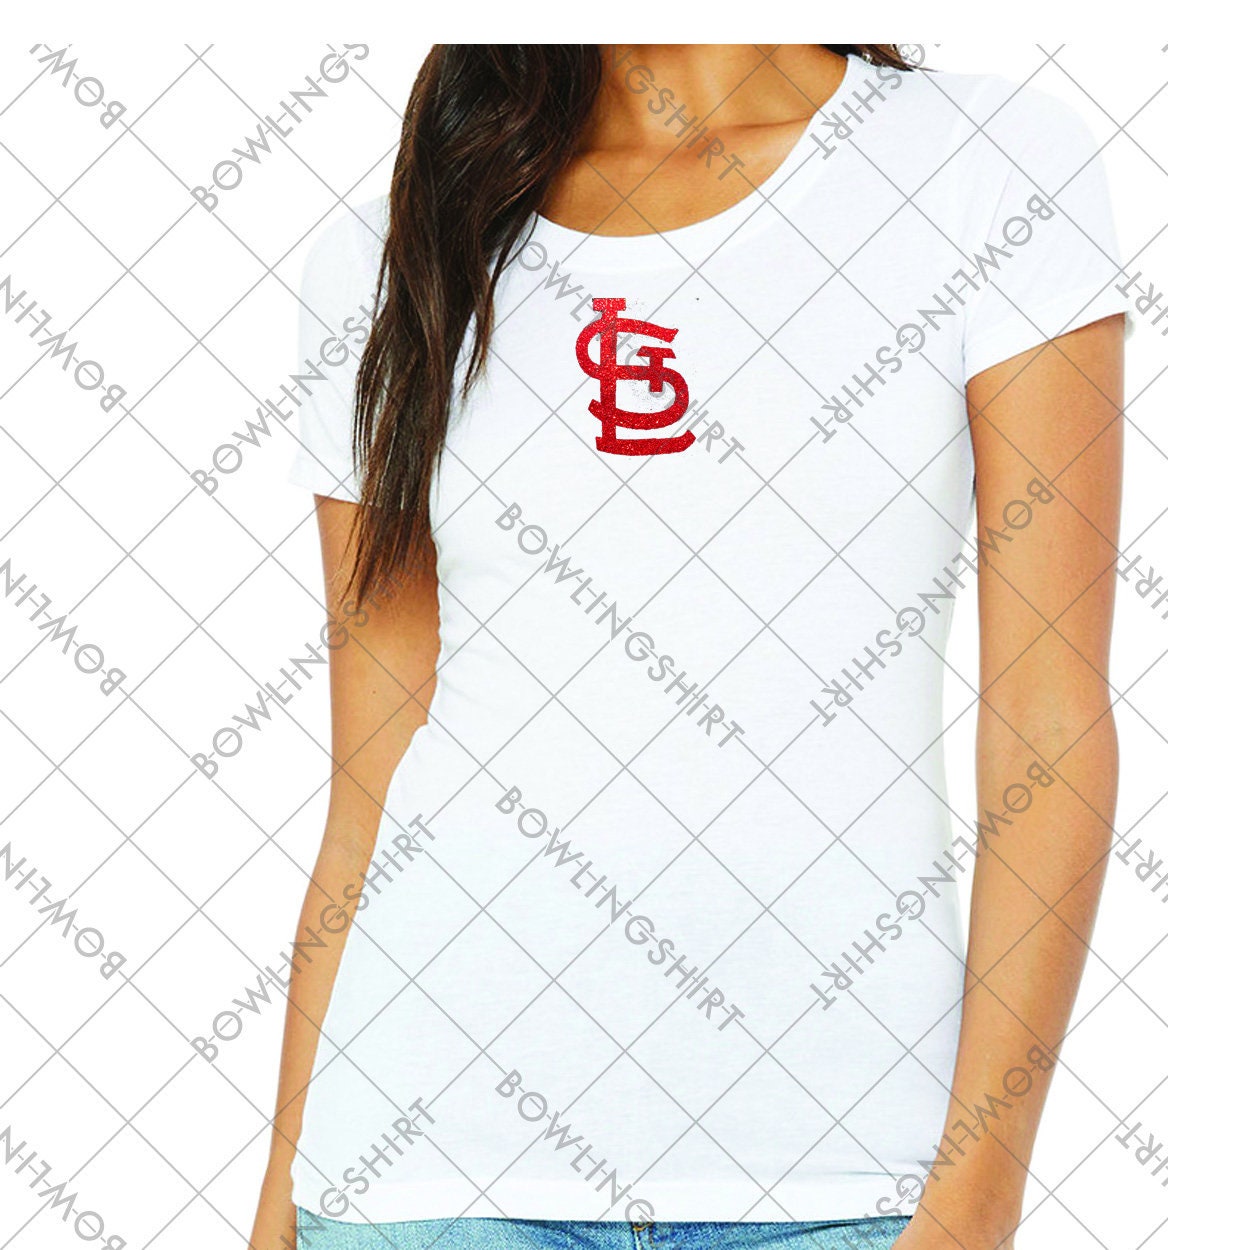 Red Glitter STL St. Louis   Bella Canvas T-shirt in Black or White  B8413 Design #5